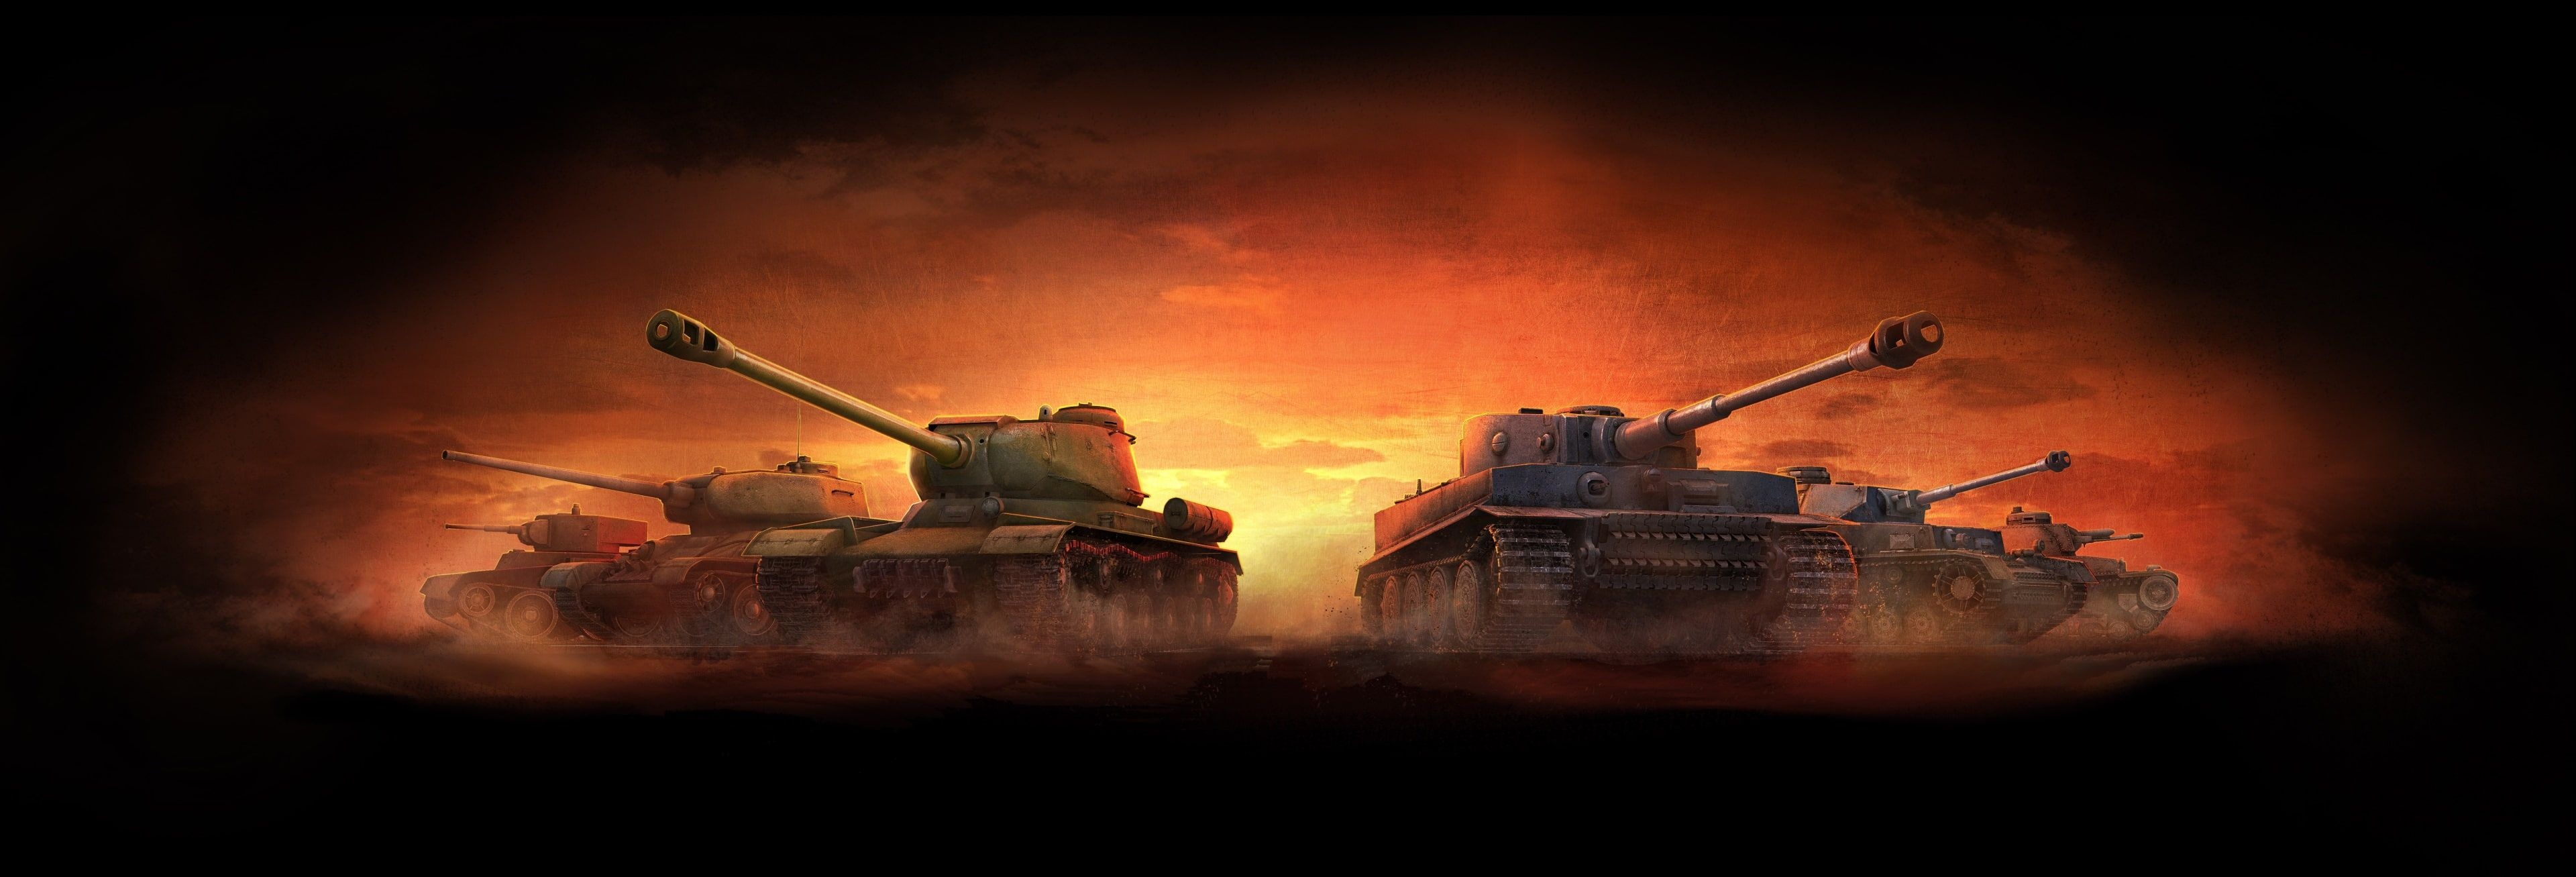 World of Tanks, 4K desktop background, High-definition tank wallpaper, 3840x1310 Dual Screen Desktop